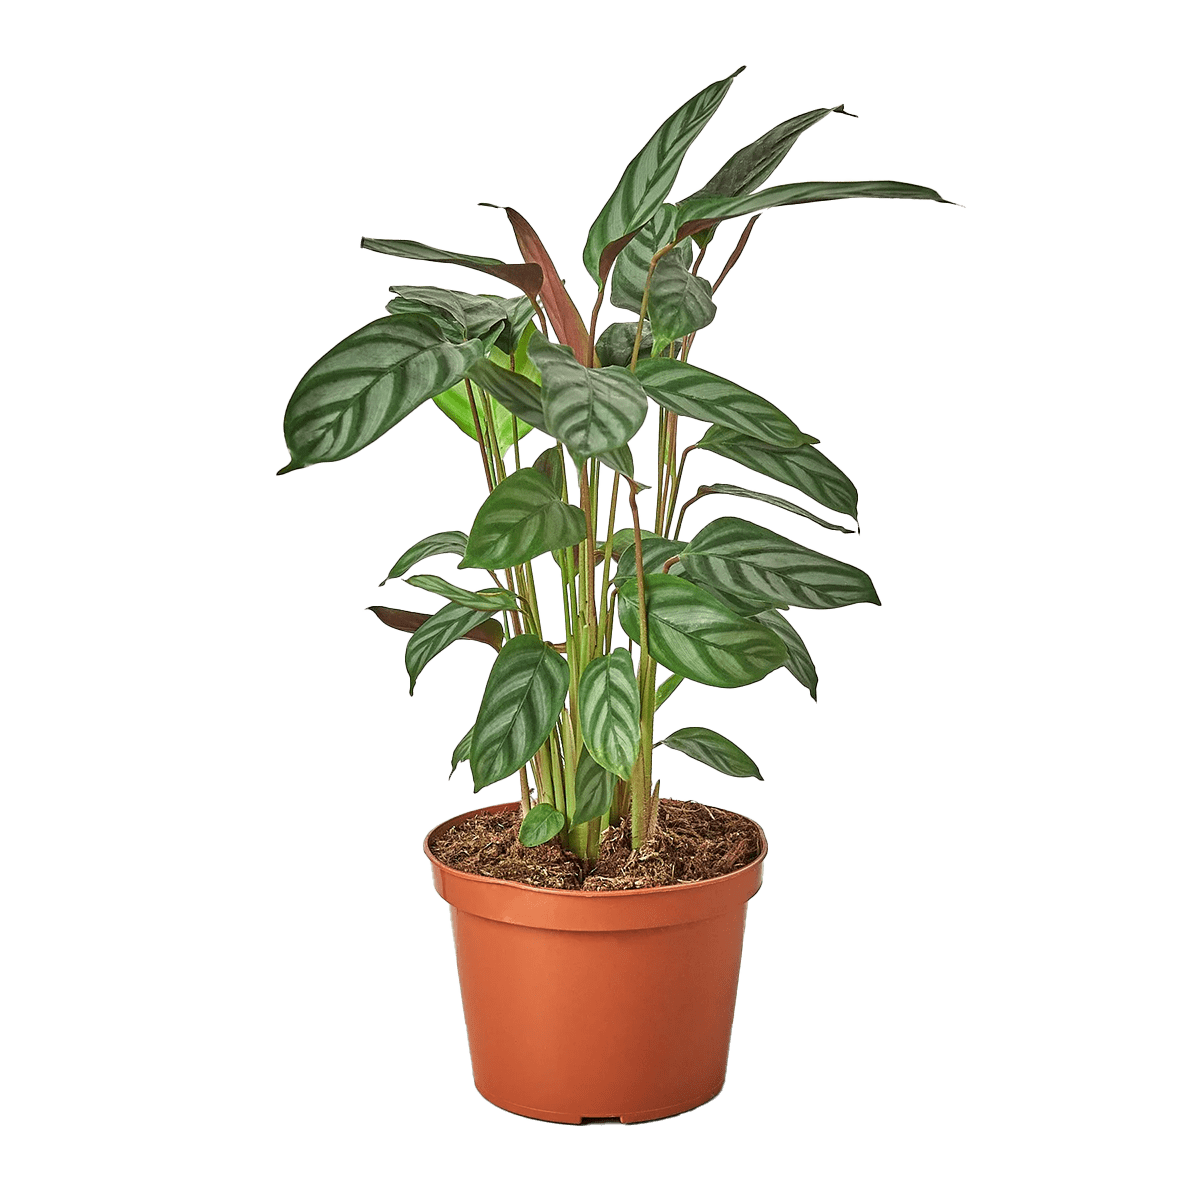 Calathea Setosa Grey Star - best online plant nursery | houseplantsale.com - houseplants for sale online | best indoor plants | forget me not flower market